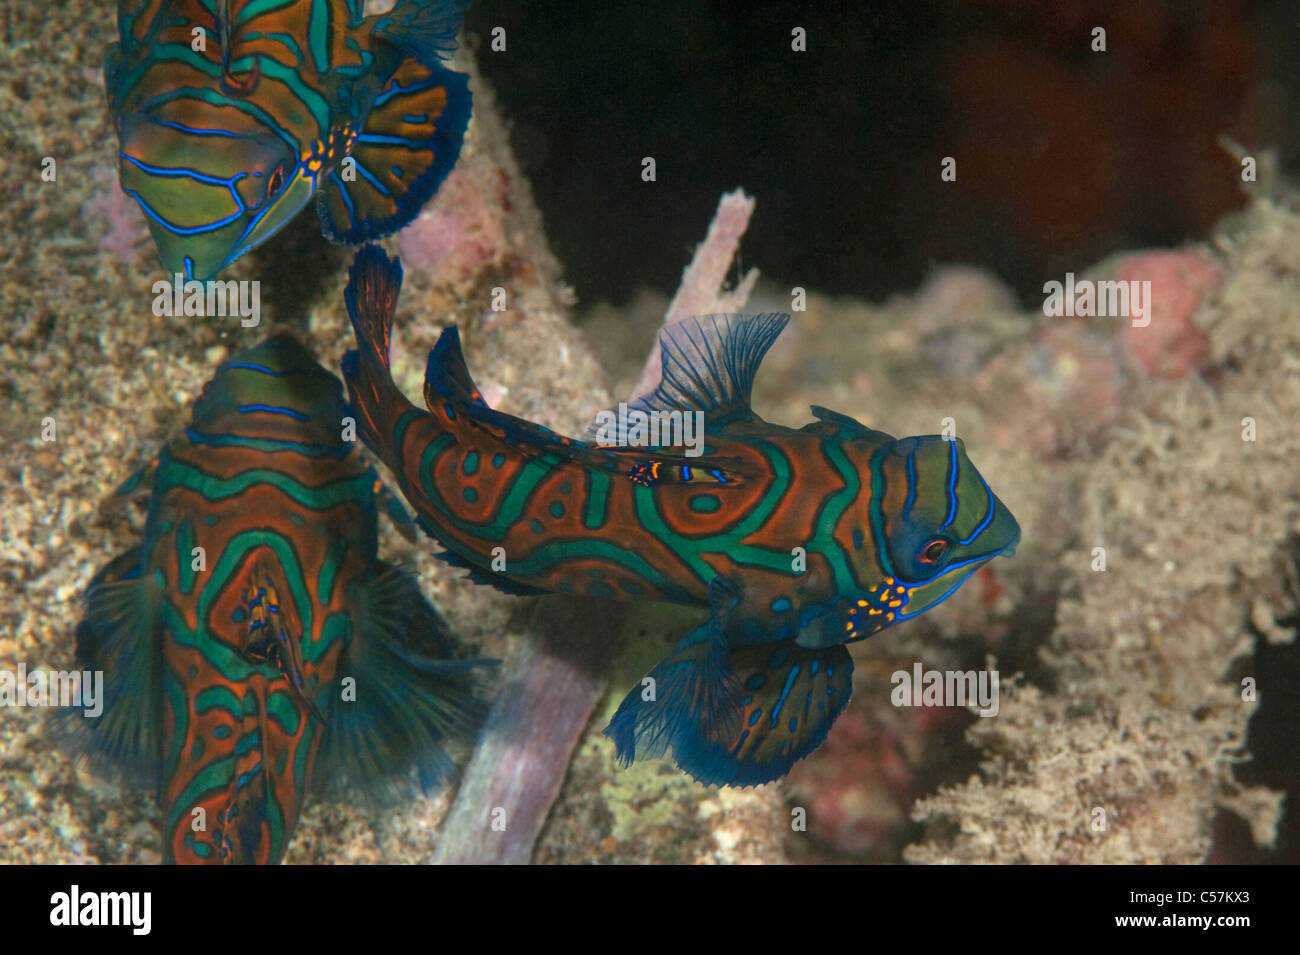 Three Mandarinfish on a reef in Indonesia. Stock Photo